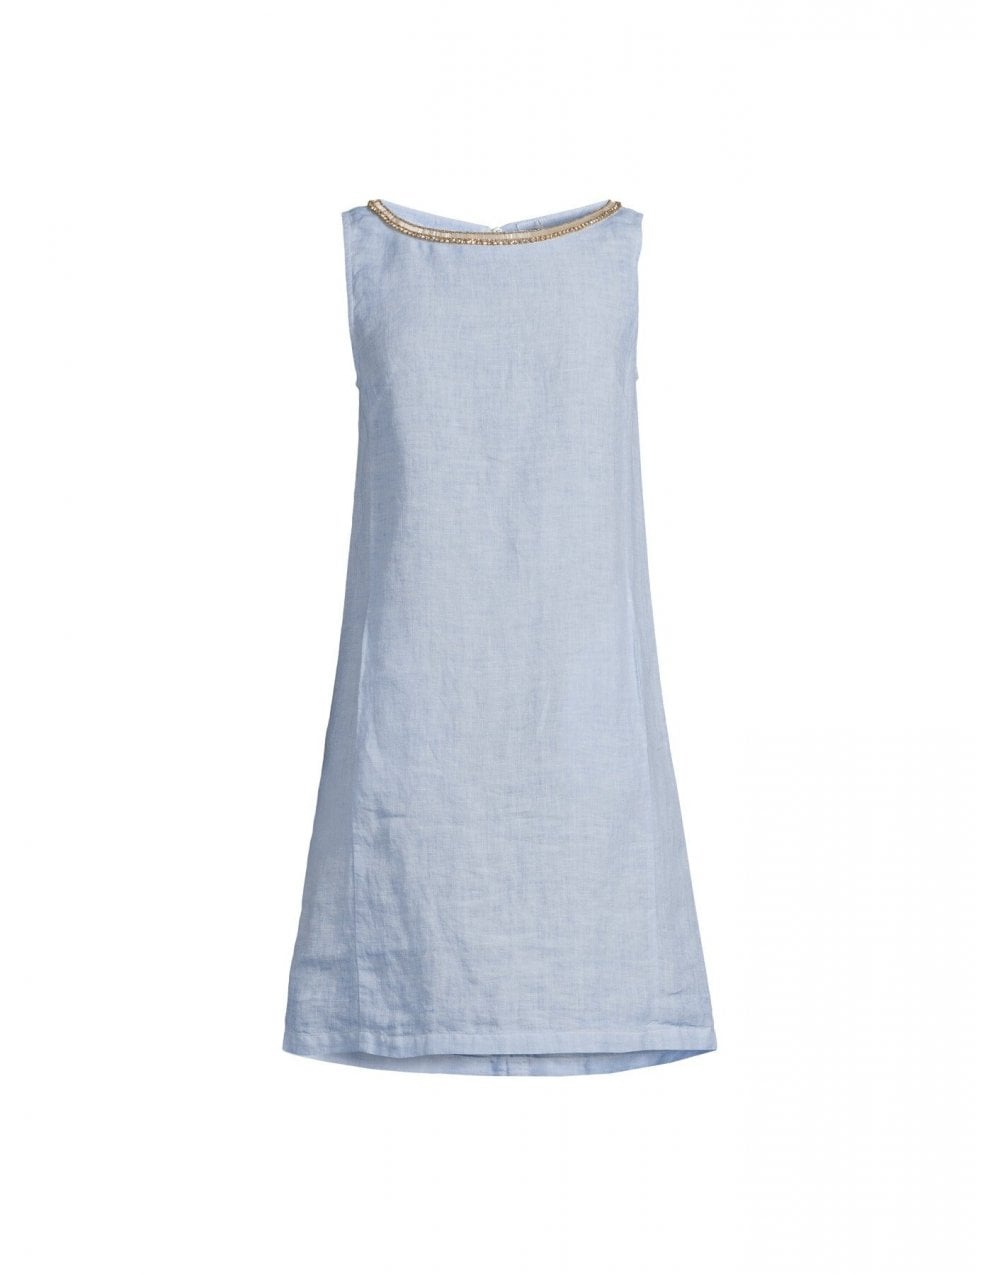 120% Linen 120% Linen Embellished Round Neck Sleeveless Dress Size: 8, Col: Blue